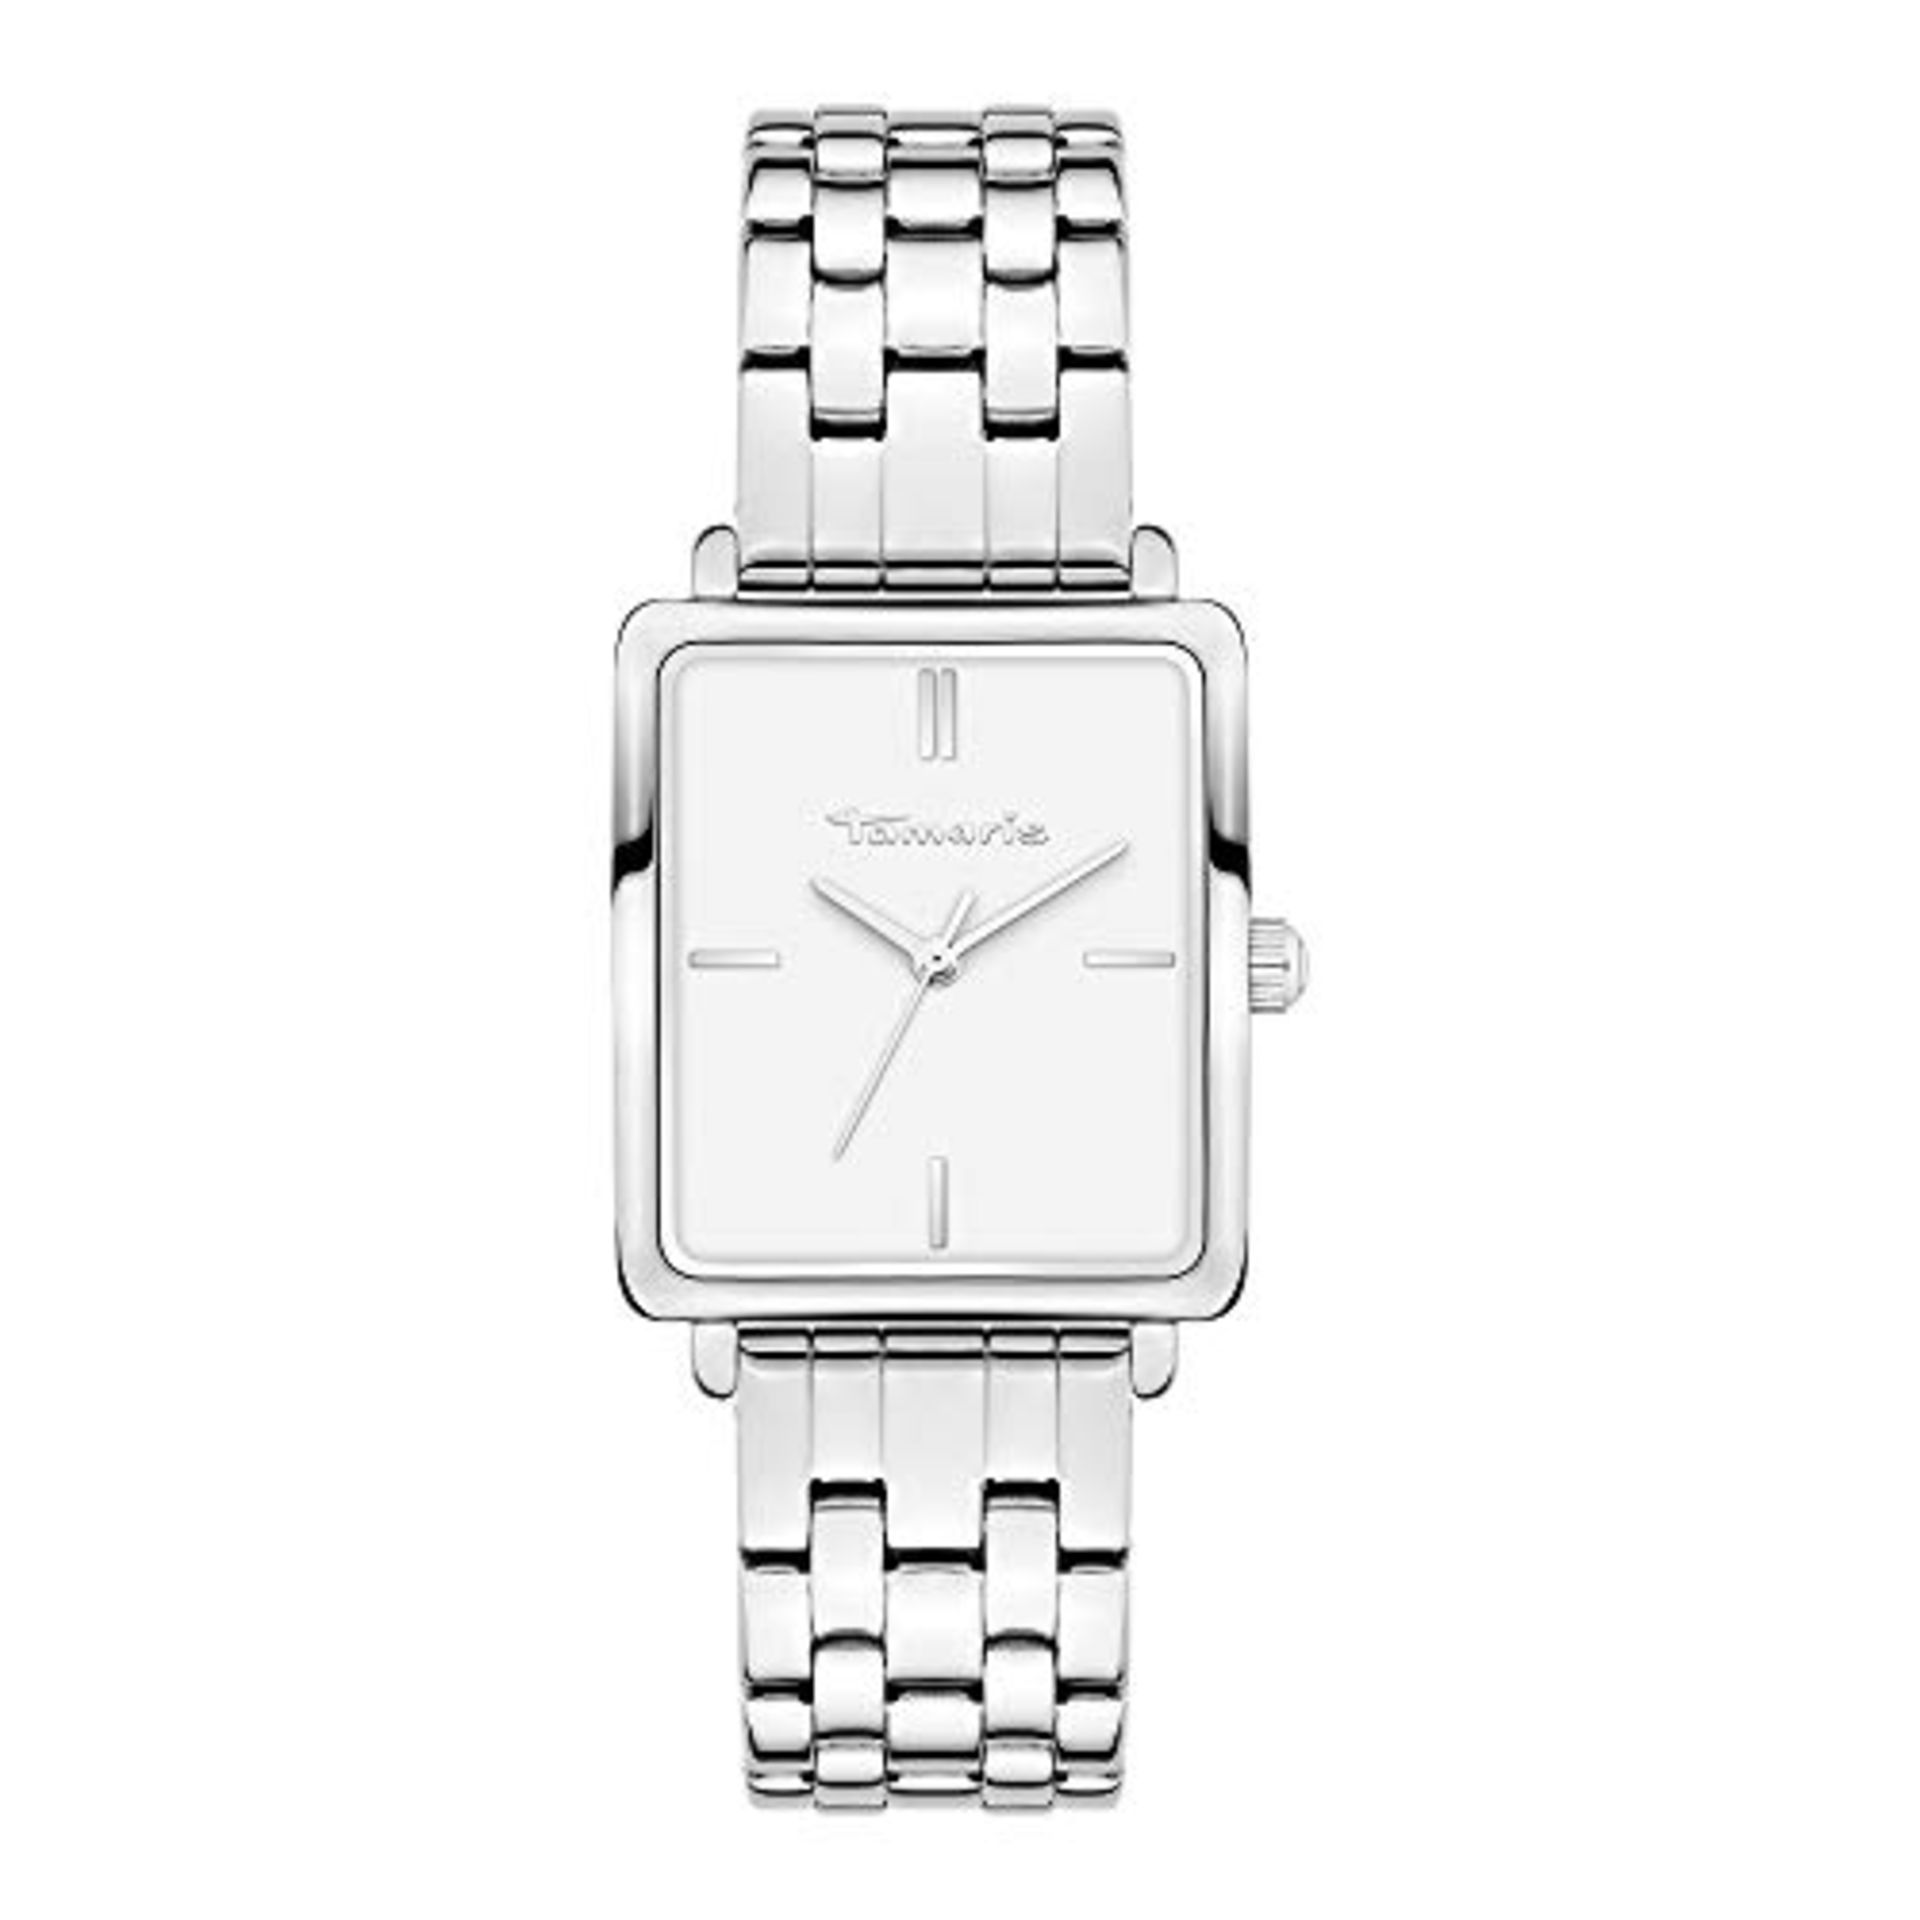 RRP £66.00 Tamaris women's analog quartz watch with stainless steel bracelet TT-0012-MQ